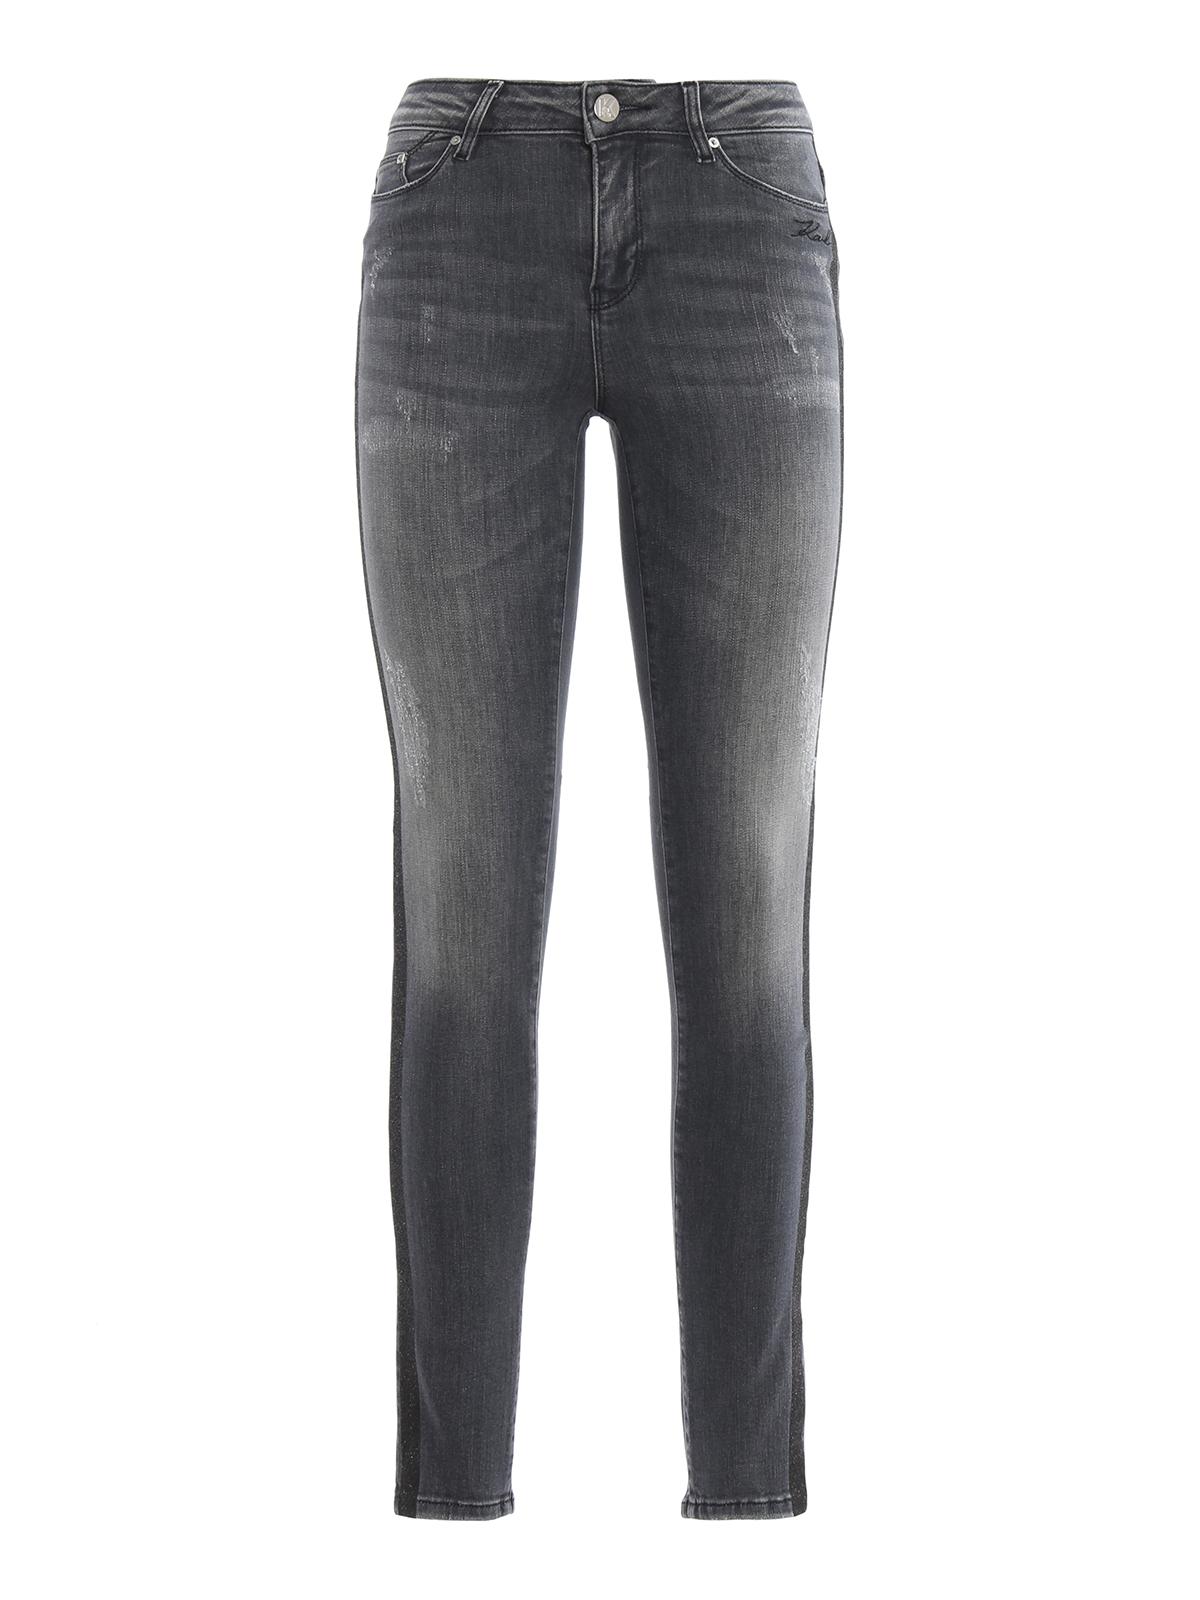 Karl Lagerfeld Denim Glitter Band Skinny Jeans in Grey (Gray) - Lyst